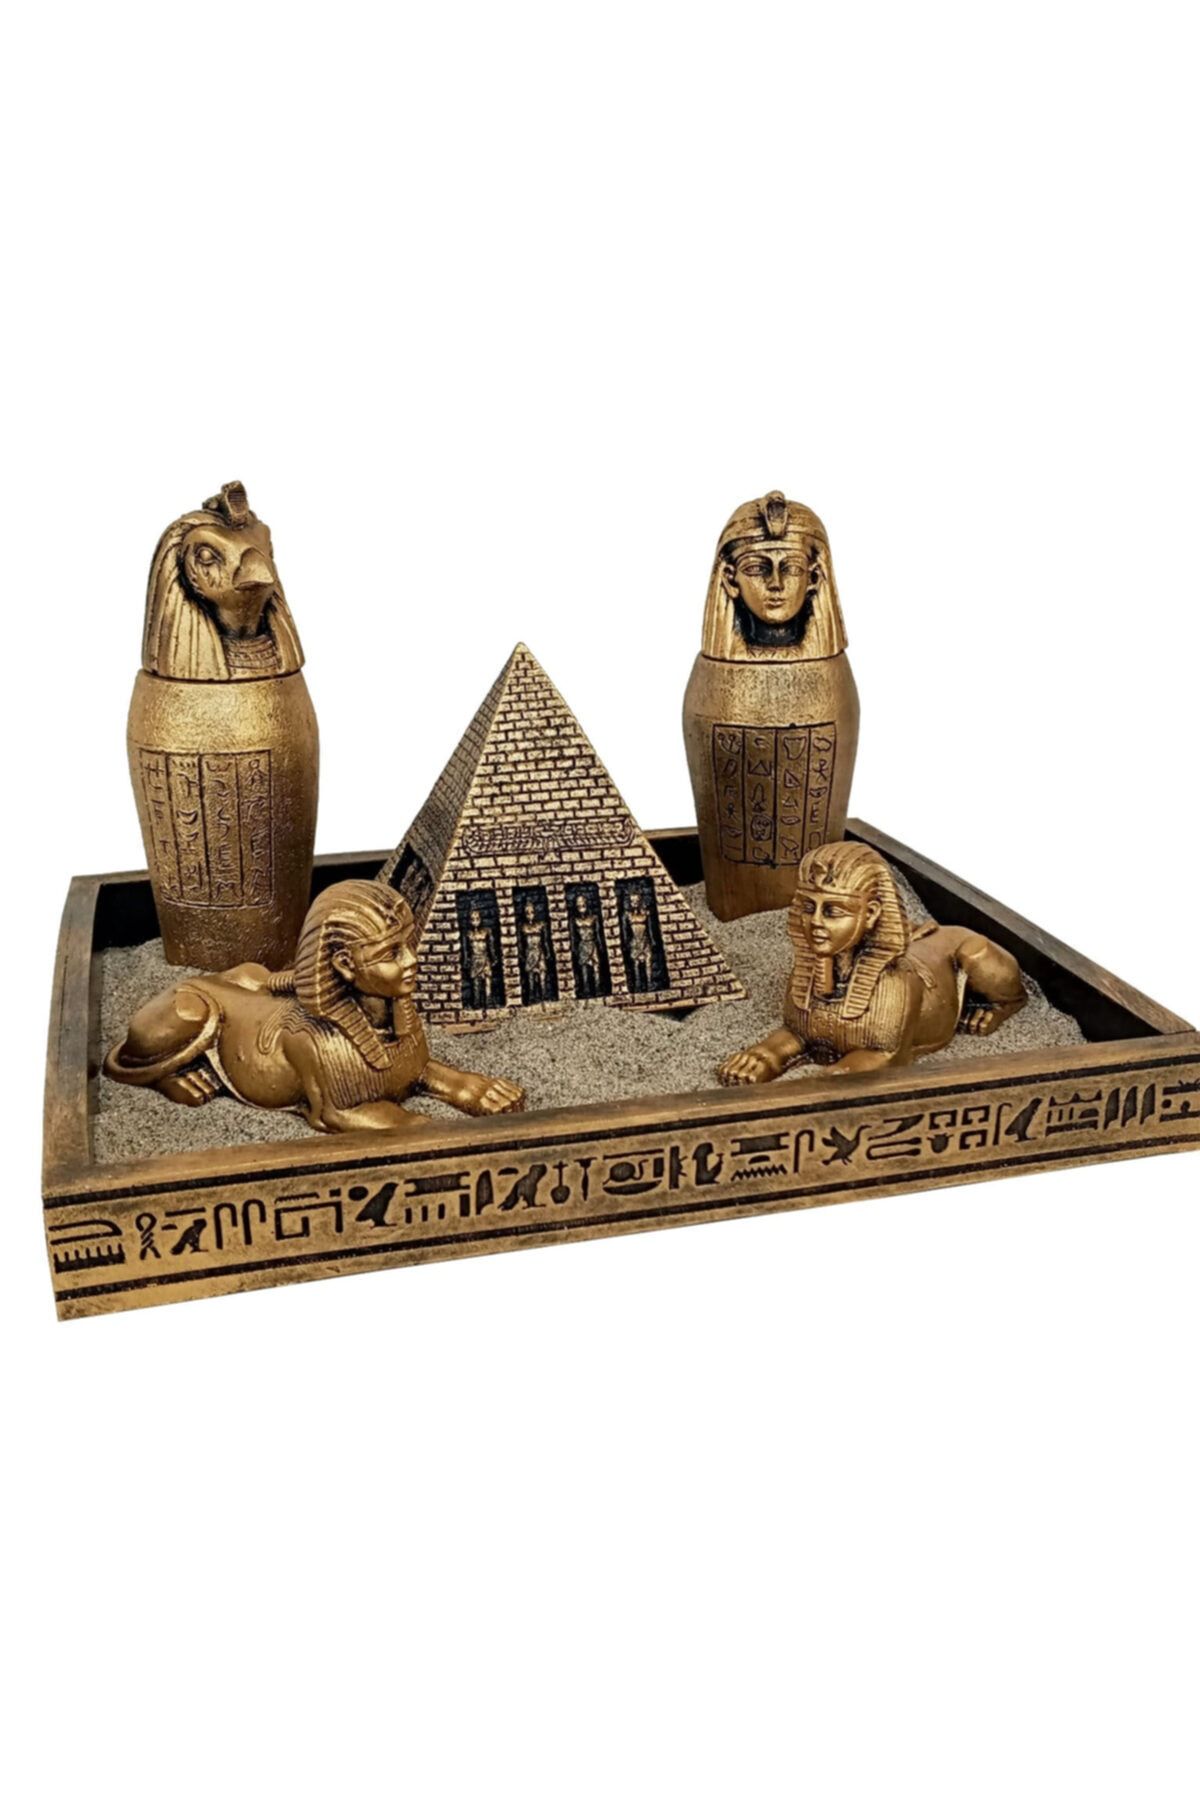 GÖKÇEN HOBİ Antik Mısır Firavun-horus-sfenks-piramit